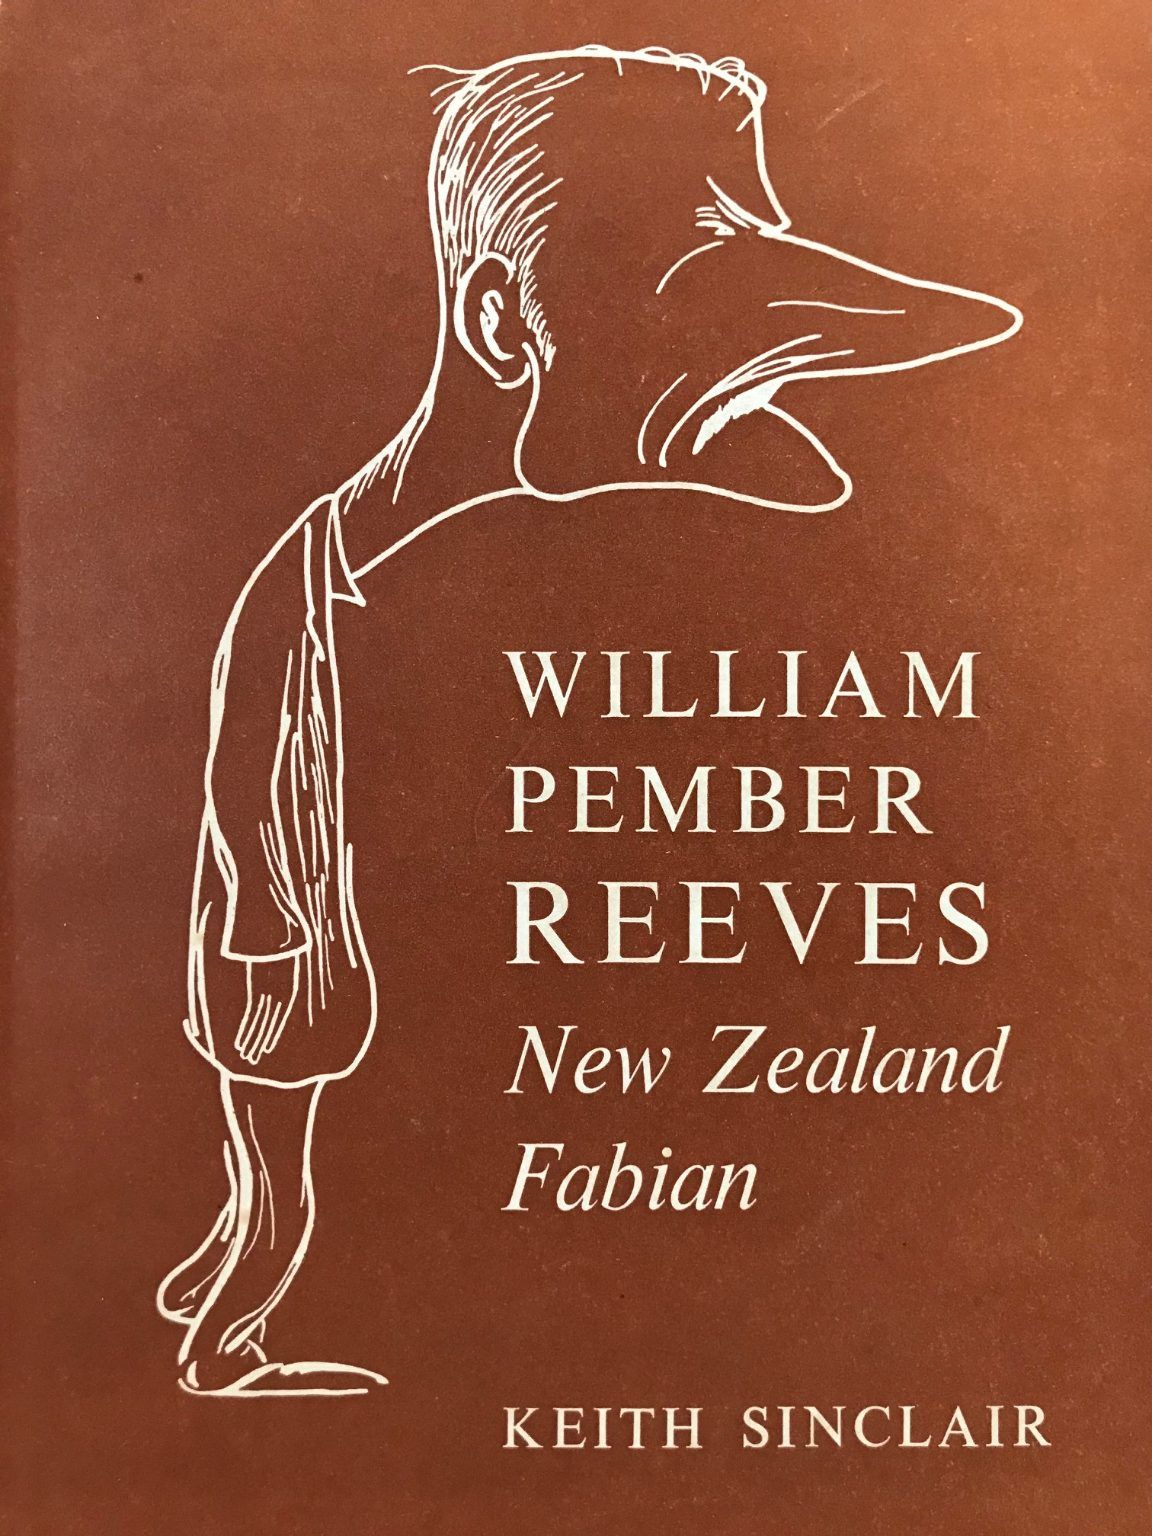 WILLIAM PEMBER REEVES: New Zealand Fabian